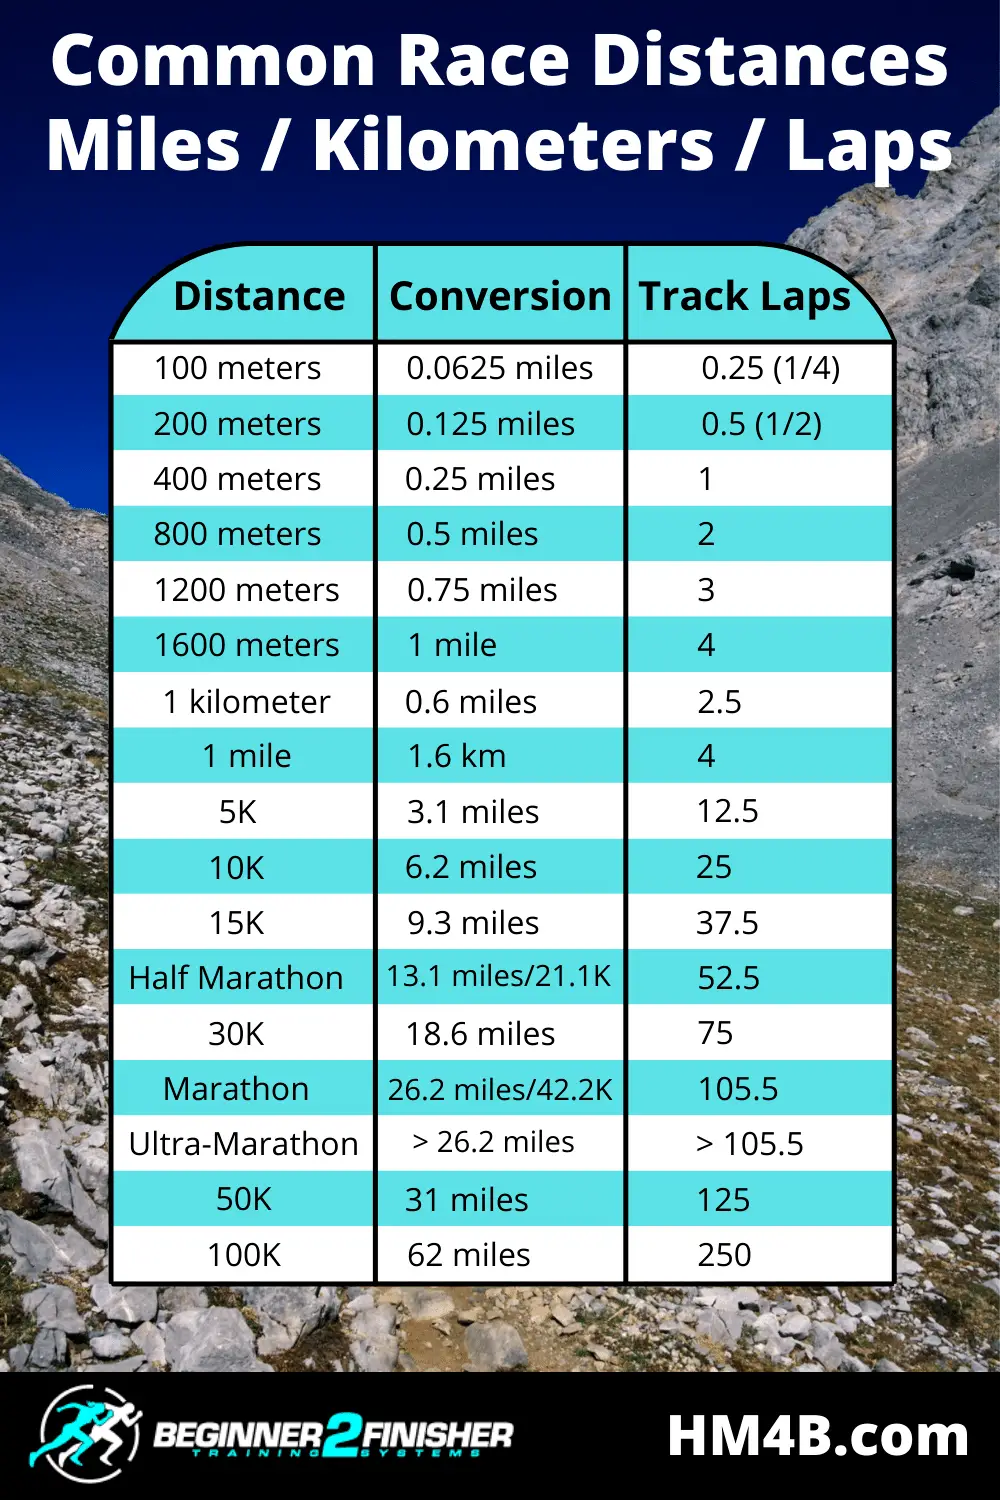 How Many Miles is a 5K, 10K, Half Marathon, Marathon, Ultra Marathon?